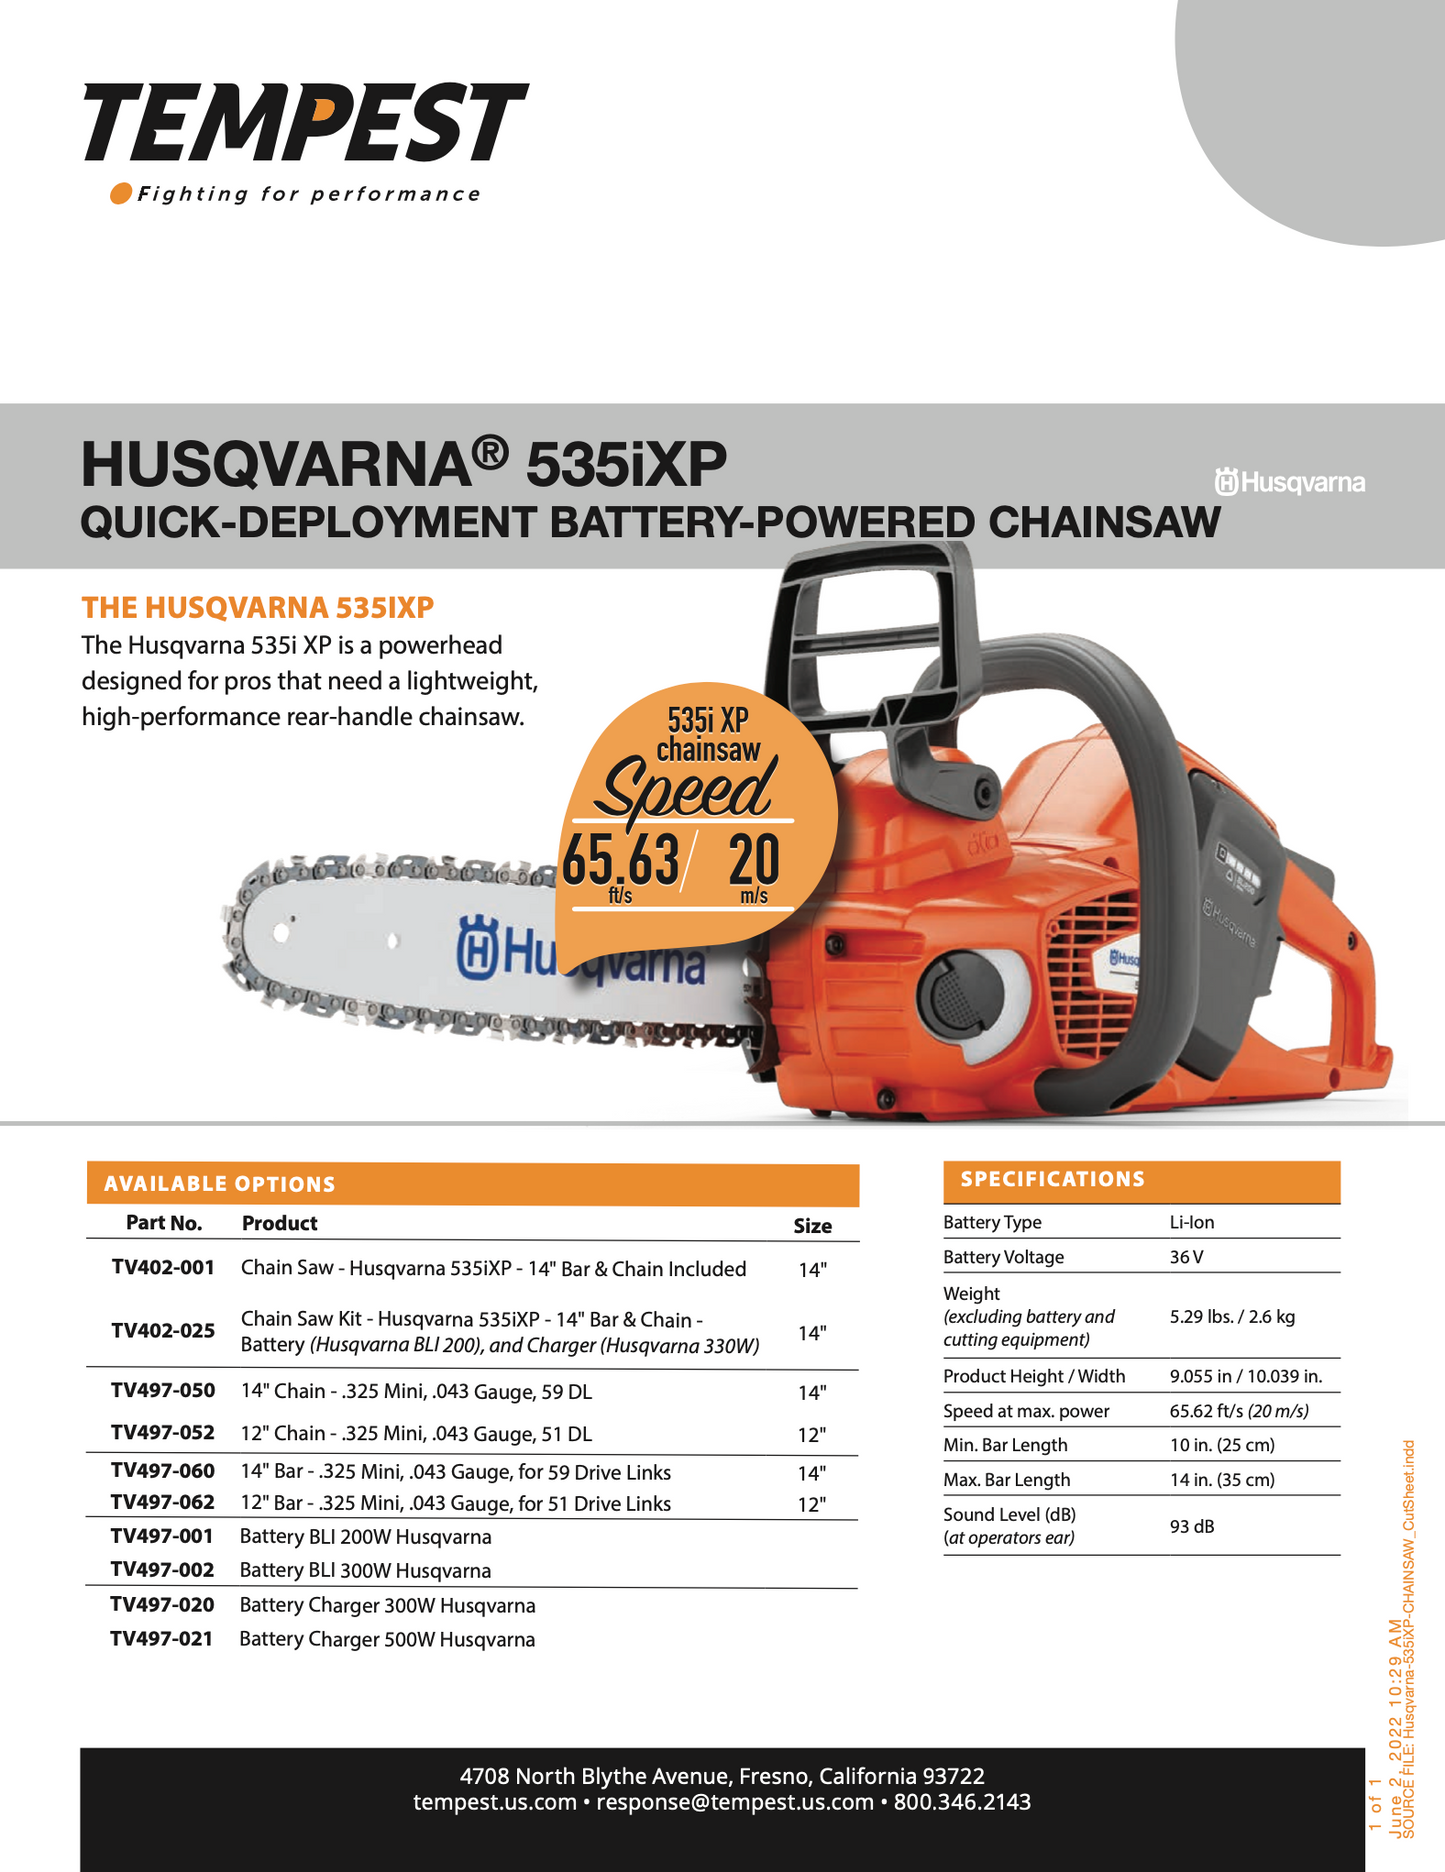 HUSQVARNA® 535I XP QUICK-DEPLOYMENT BATTERY-POWERED SAWS